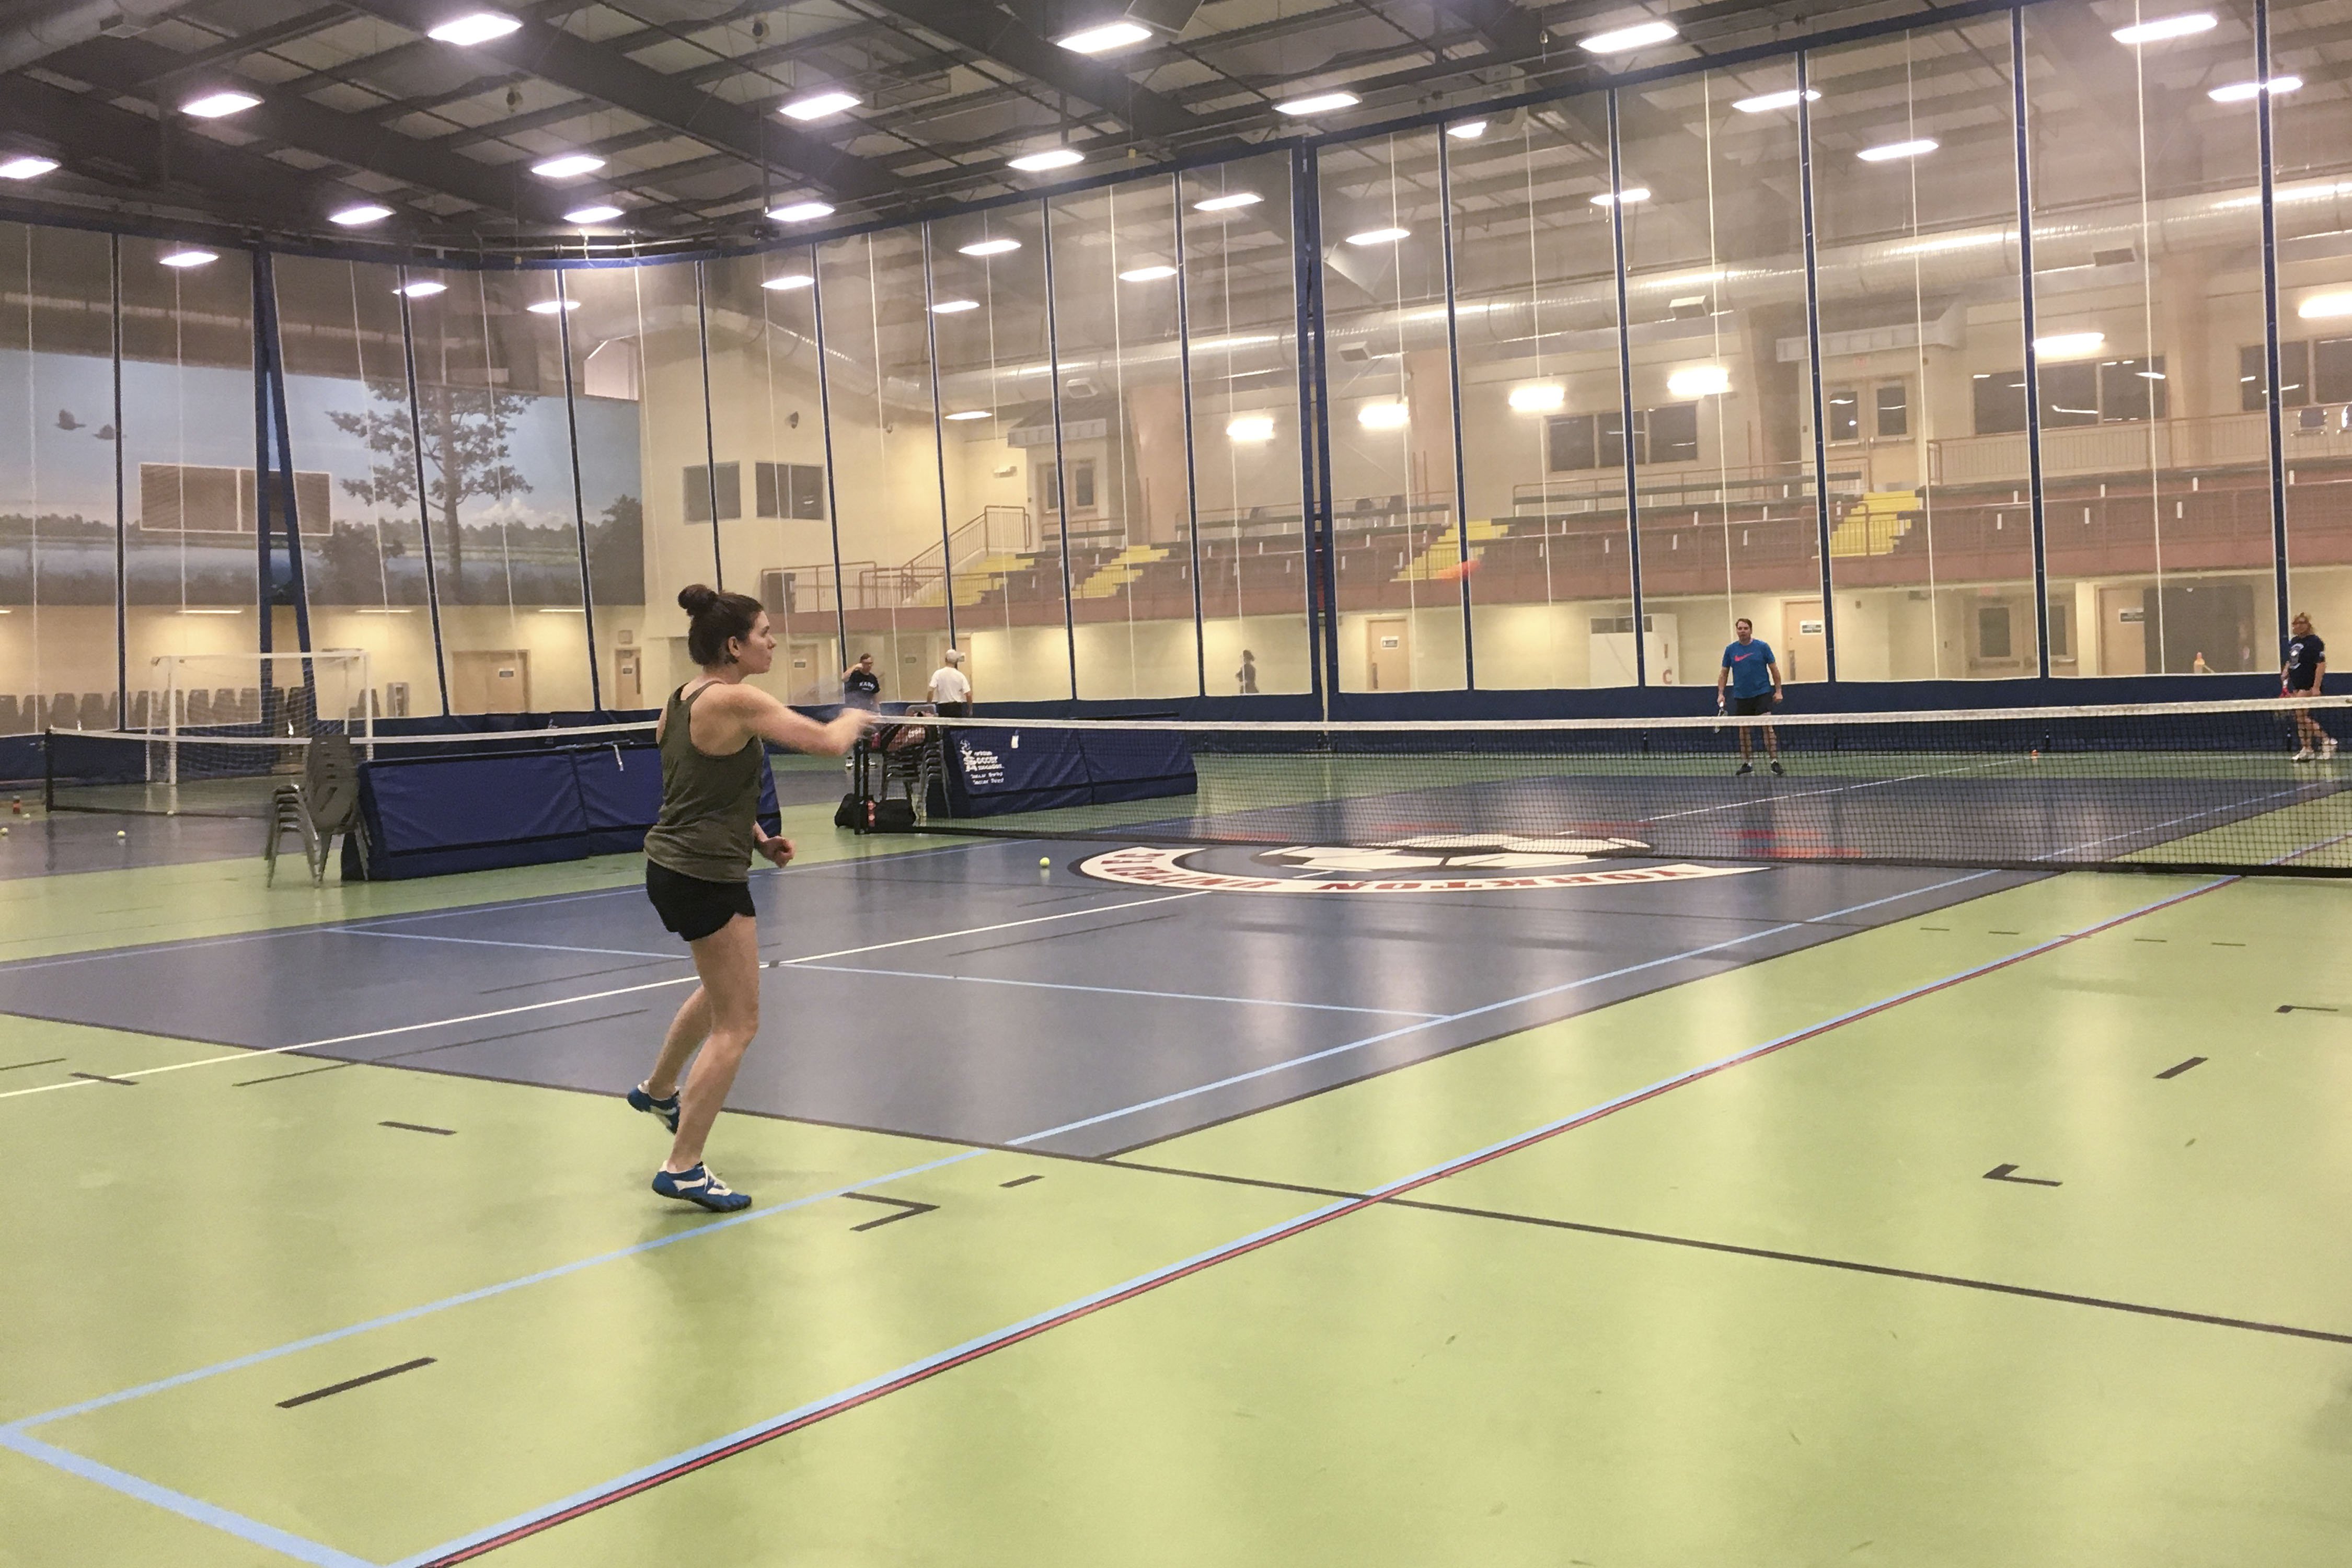 People playing indoor tennis.